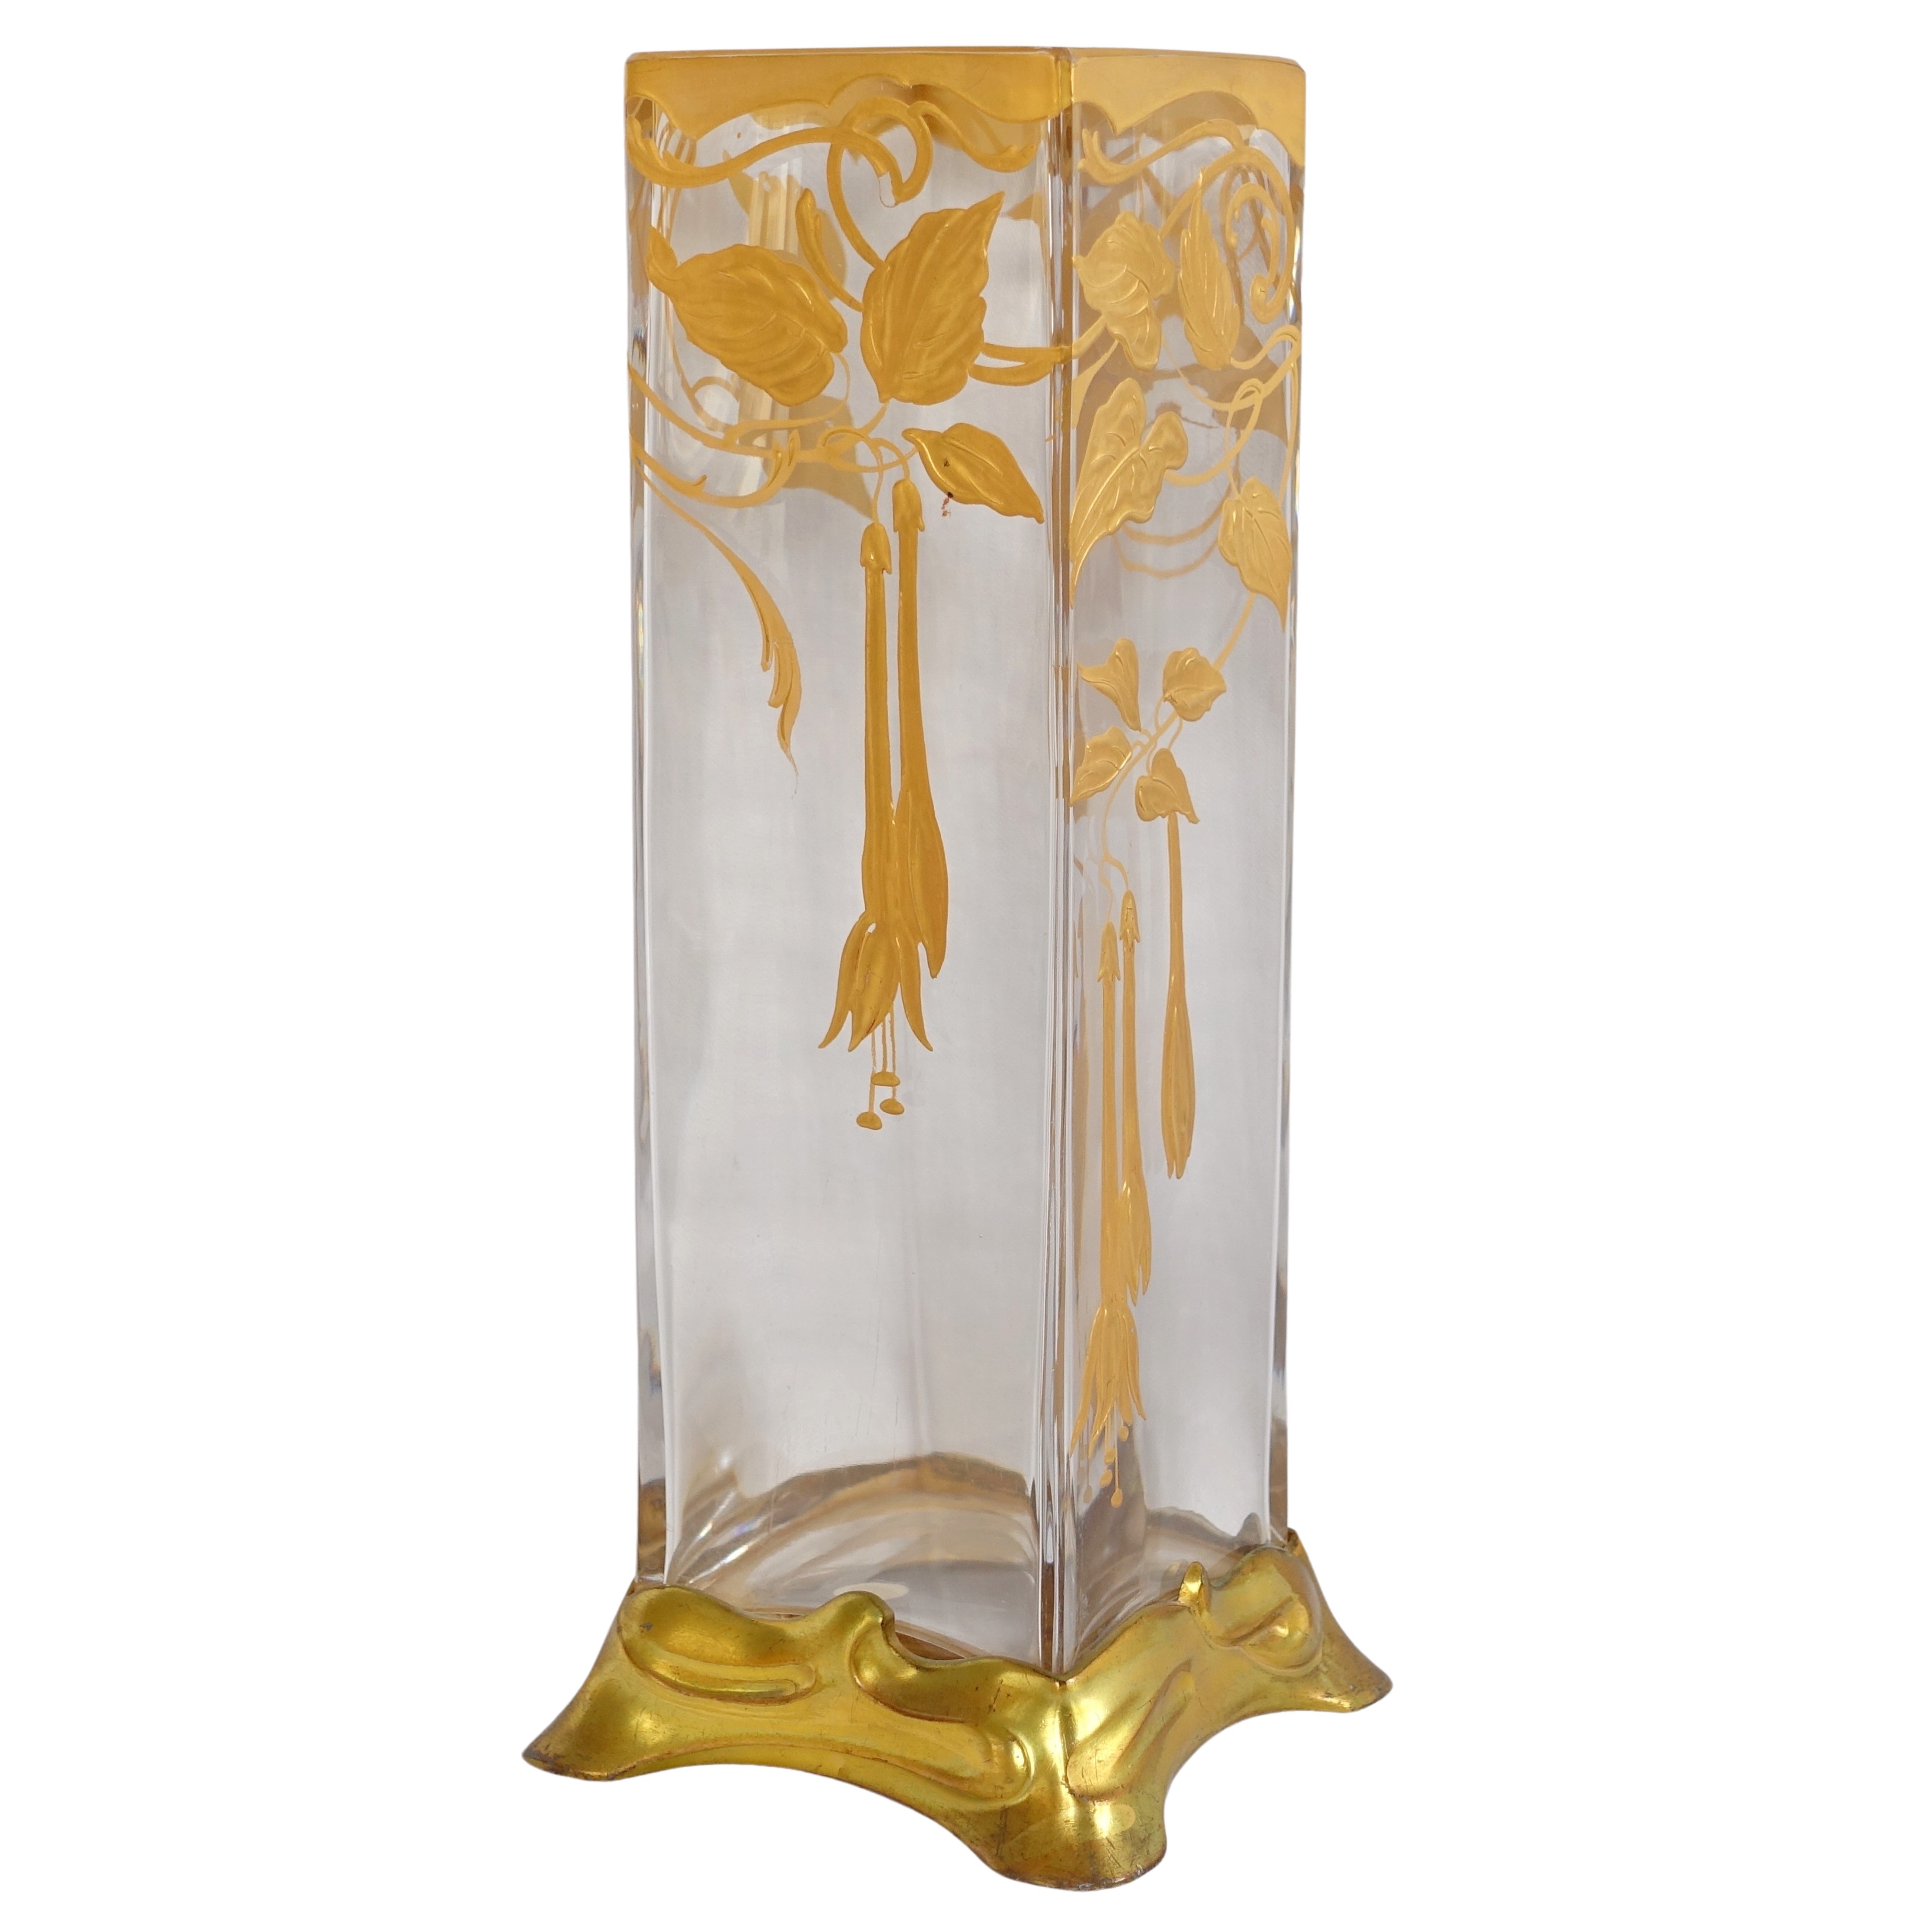 Baccarat crystal Art Nouveau vase enhanced with fine gold, ormolu frame, circa 1900